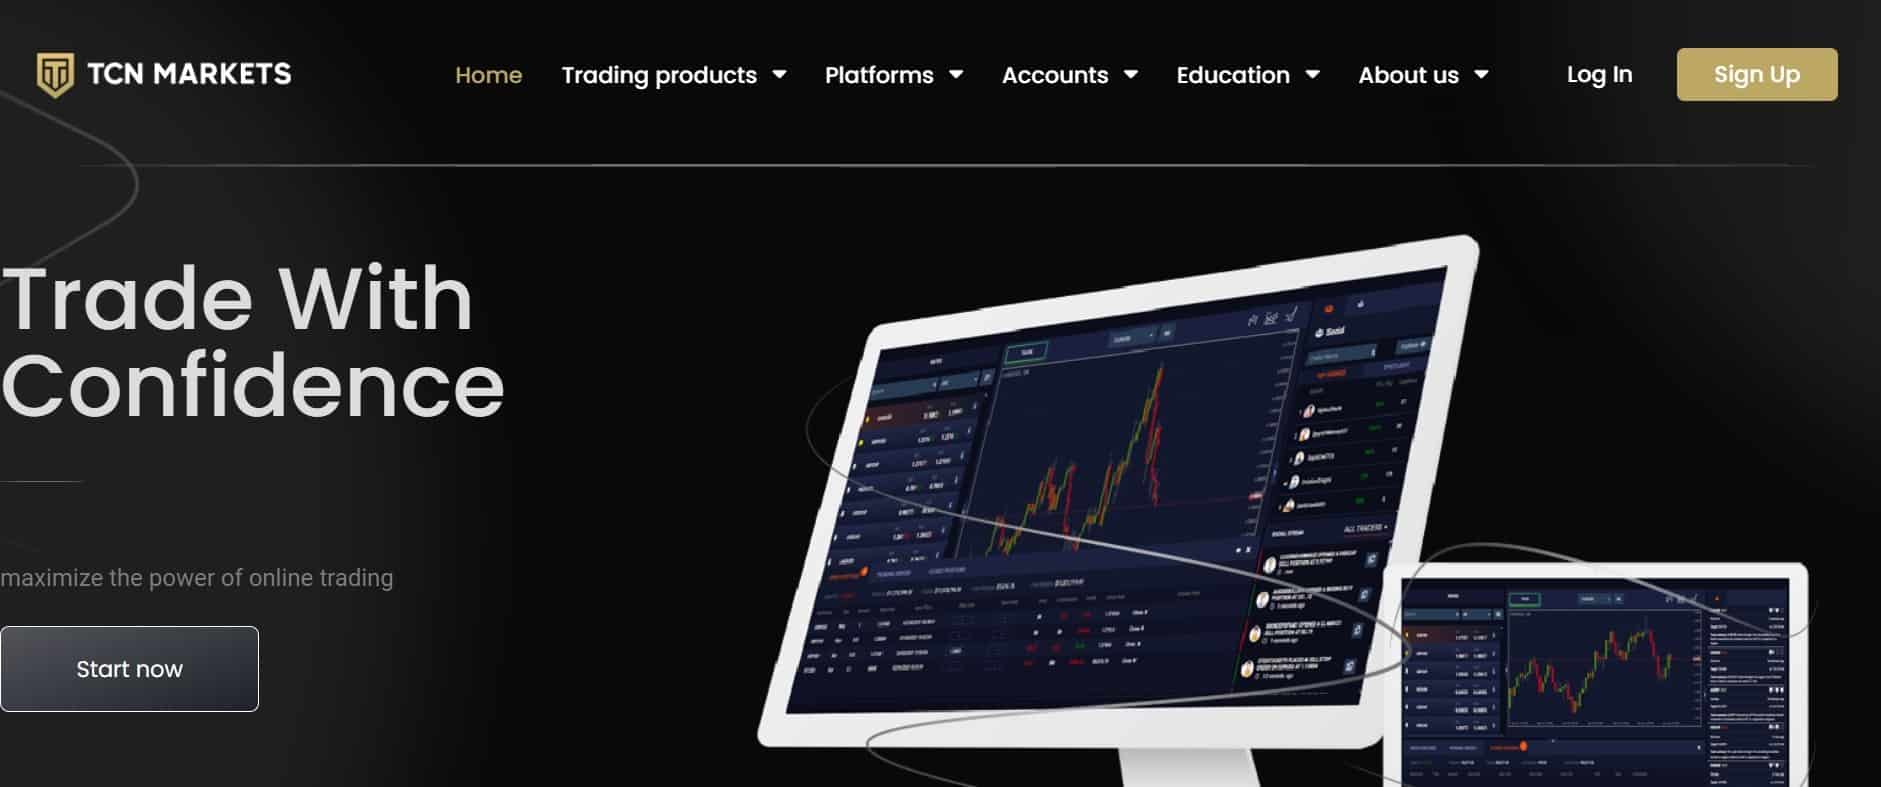 TCN Markets website